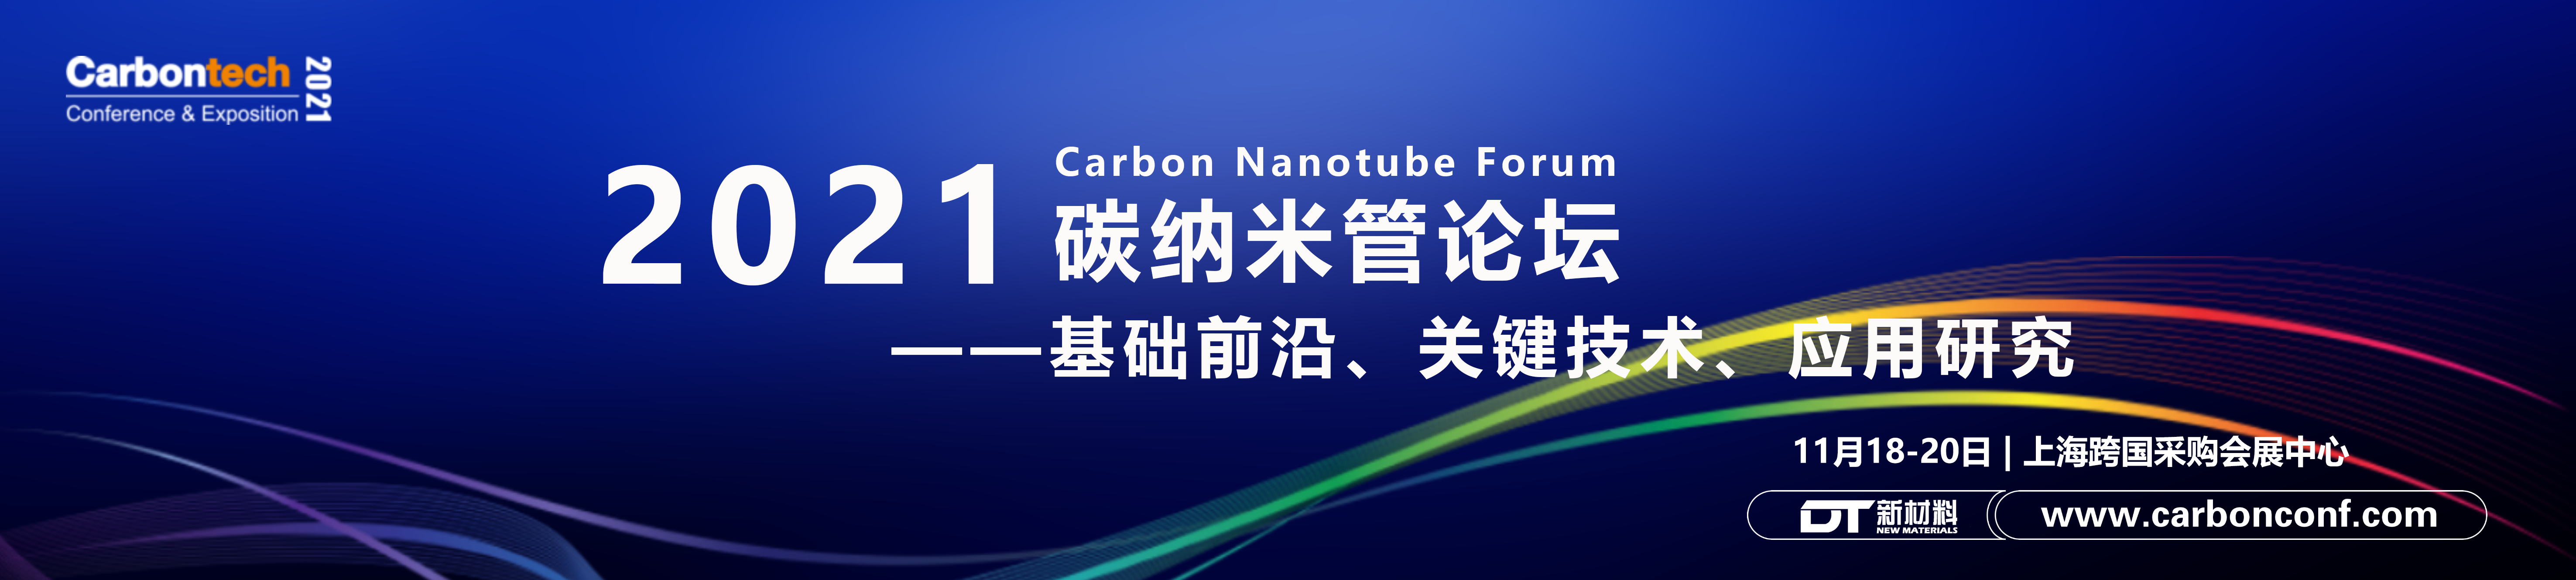 Carbontech 2021碳納米管論壇